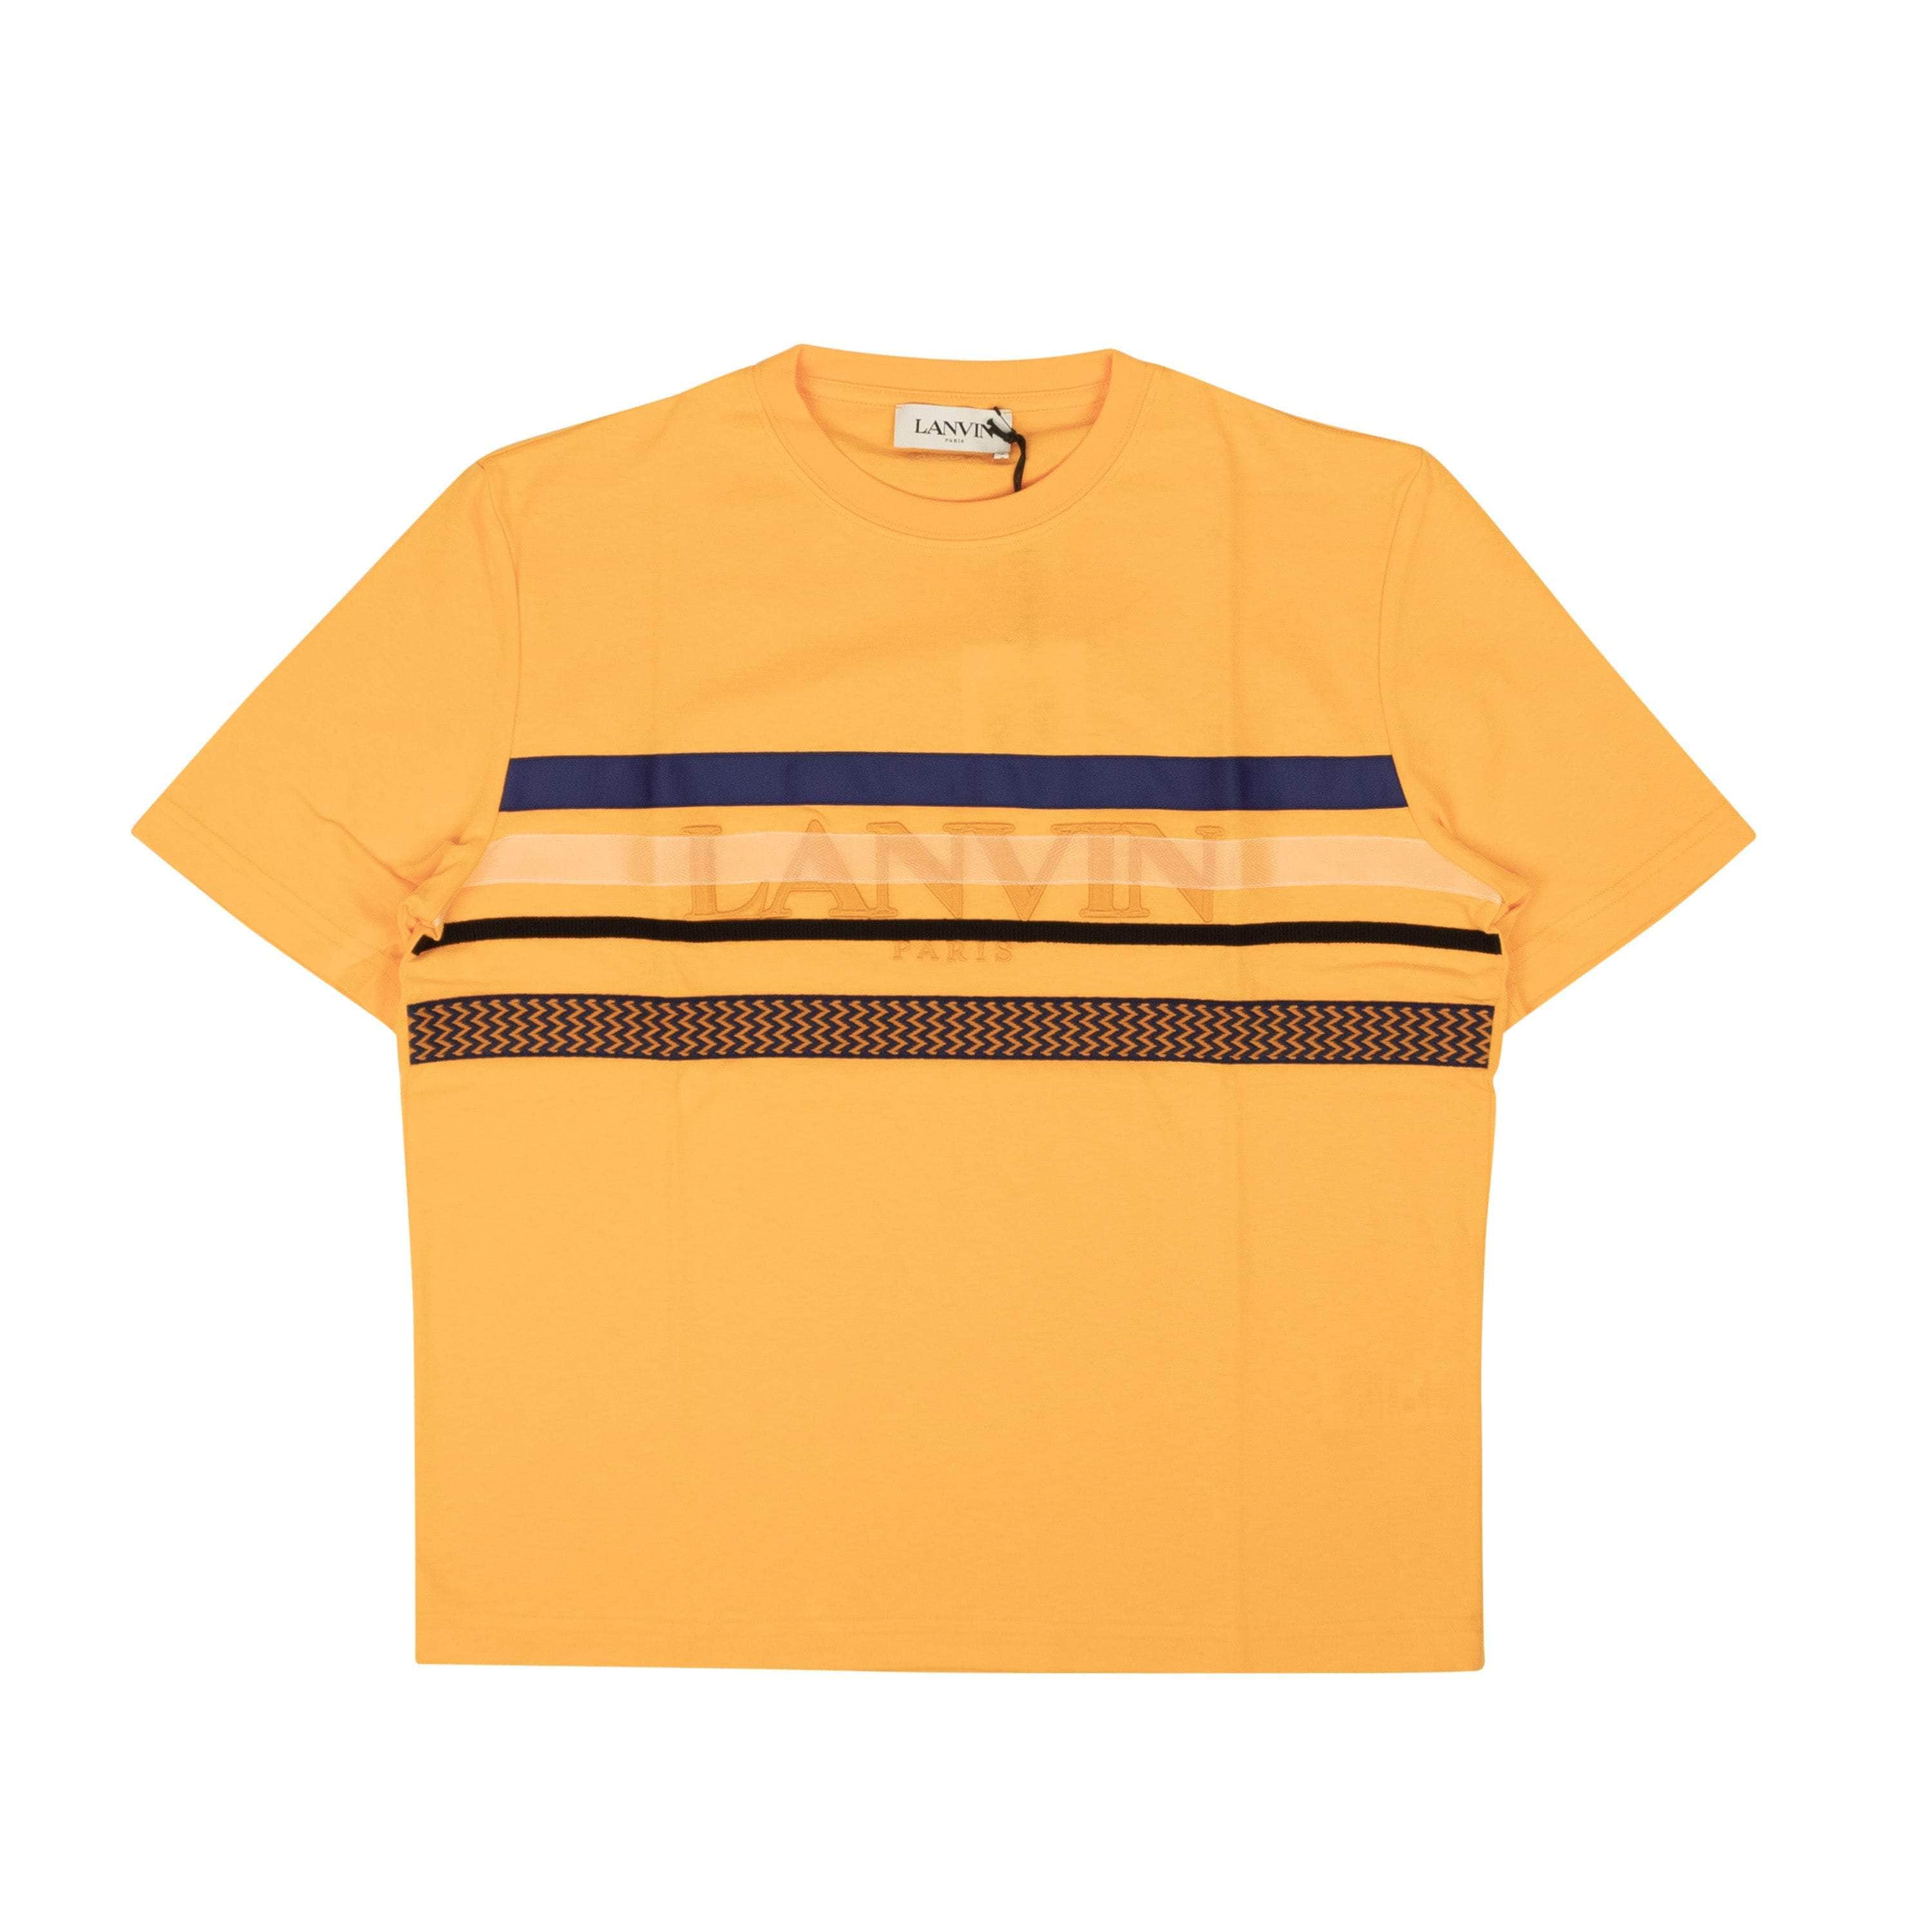 Lanvin 250-500, channelenable-all, chicmi, couponcollection, gender-mens, main-clothing, mens-shoes, size-l, size-m, size-s, size-xl, size-xxl Mandarin Orange Cotton Classic Logo T-Shirt